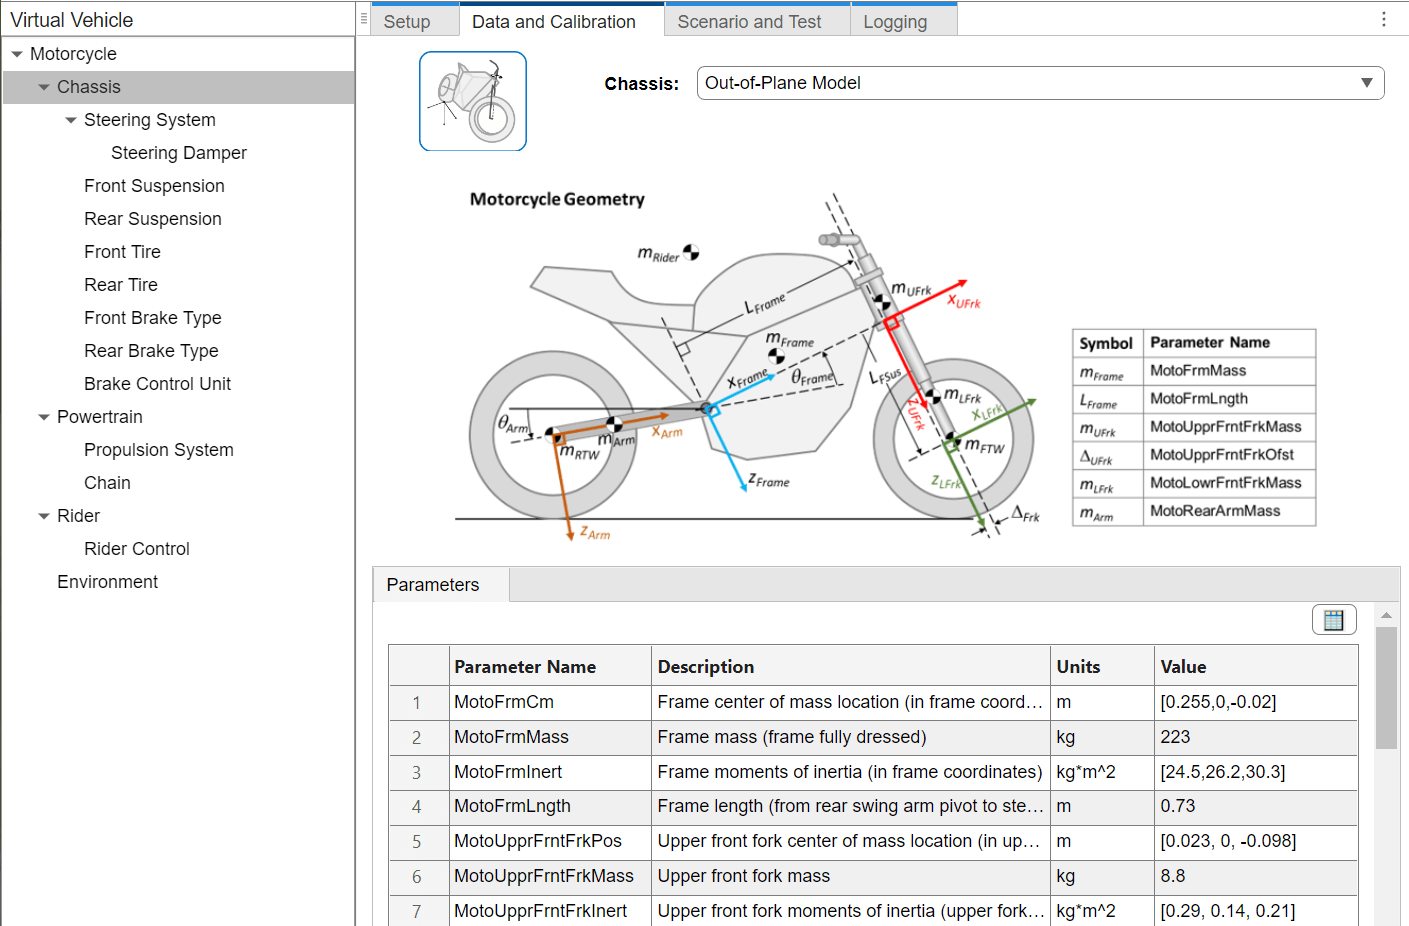 Virtual Vehicle Composer app scenario and test tab